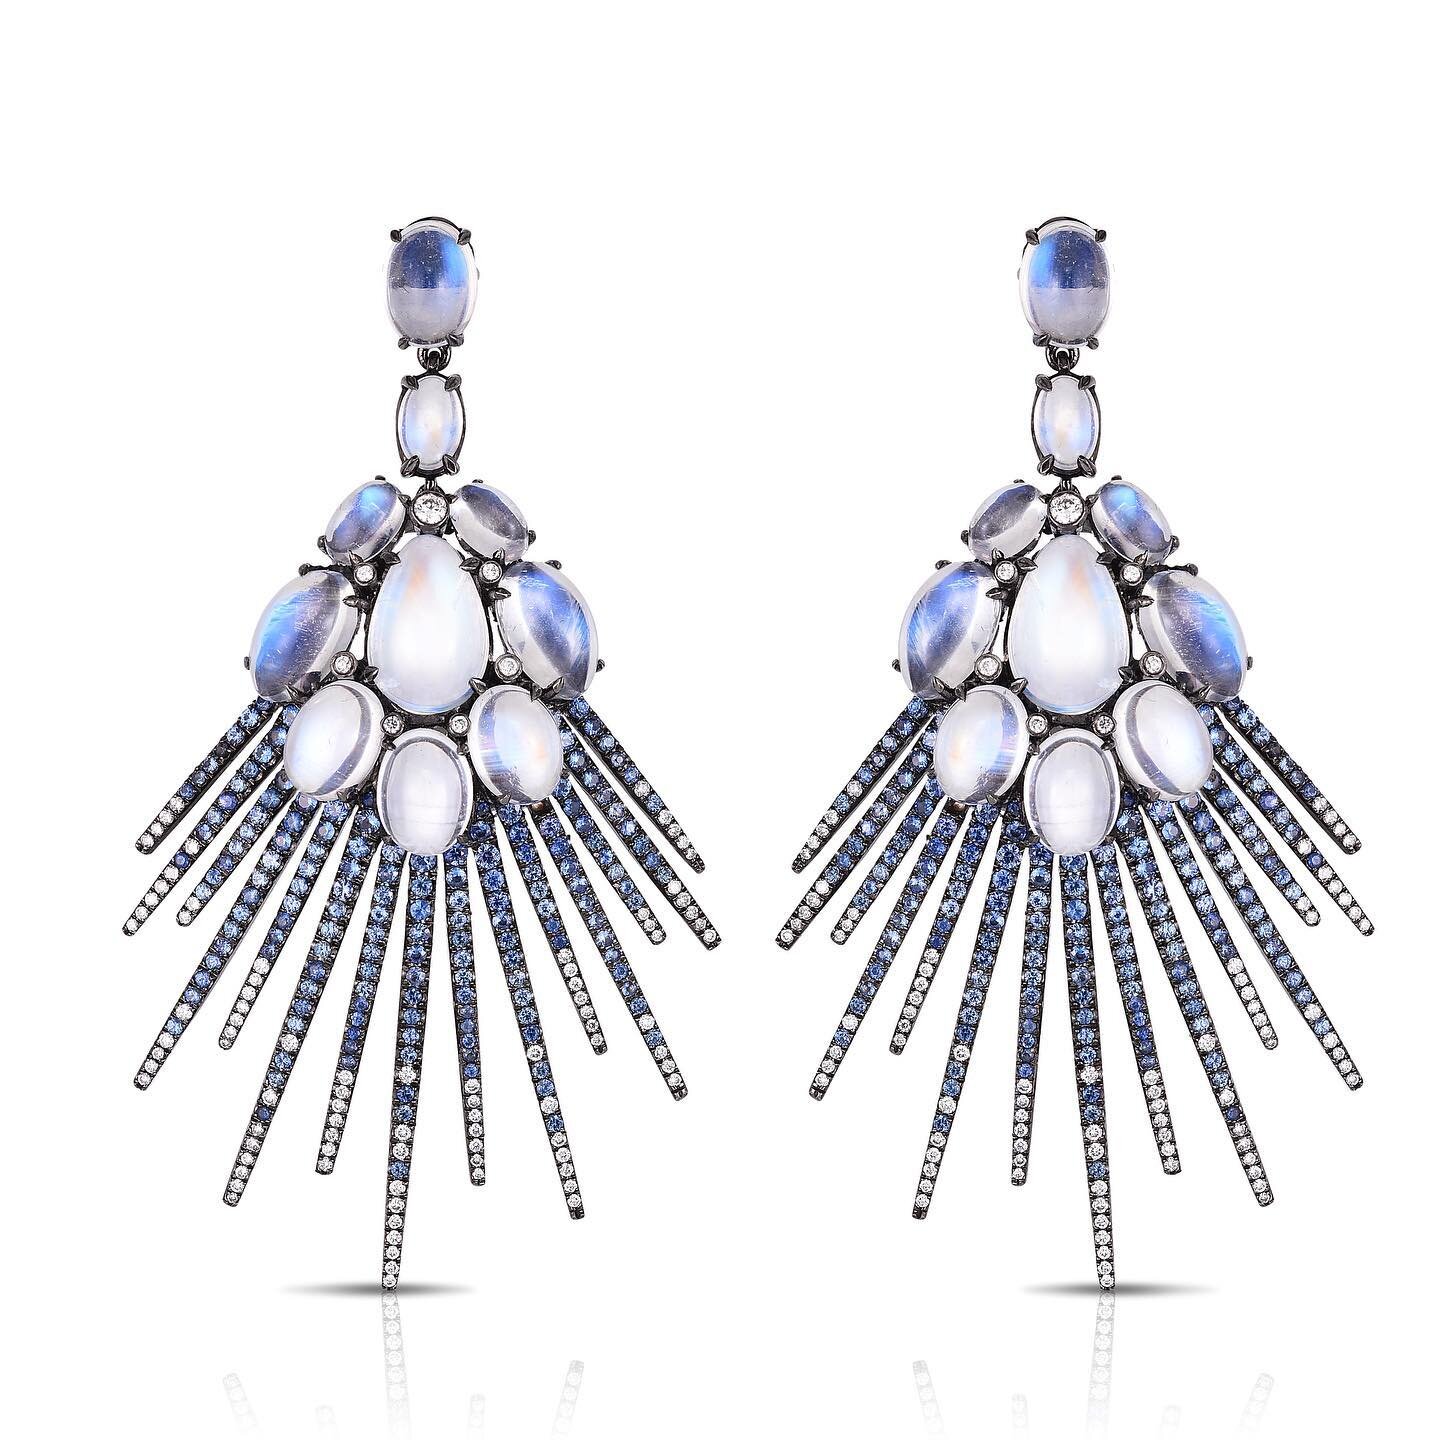 Moonstone Burst Earrings with Sapphires &amp; Diamond Drop. Designed &amp; Made by Cicada in NYC.
.
.
.
.
#cicadajewelry #luxury #diamonds #nyc #jewelry #highjewelry #highjewellery #earrings  #cicada #oneofakind #oneofakindjewelry #finejewelry #insta